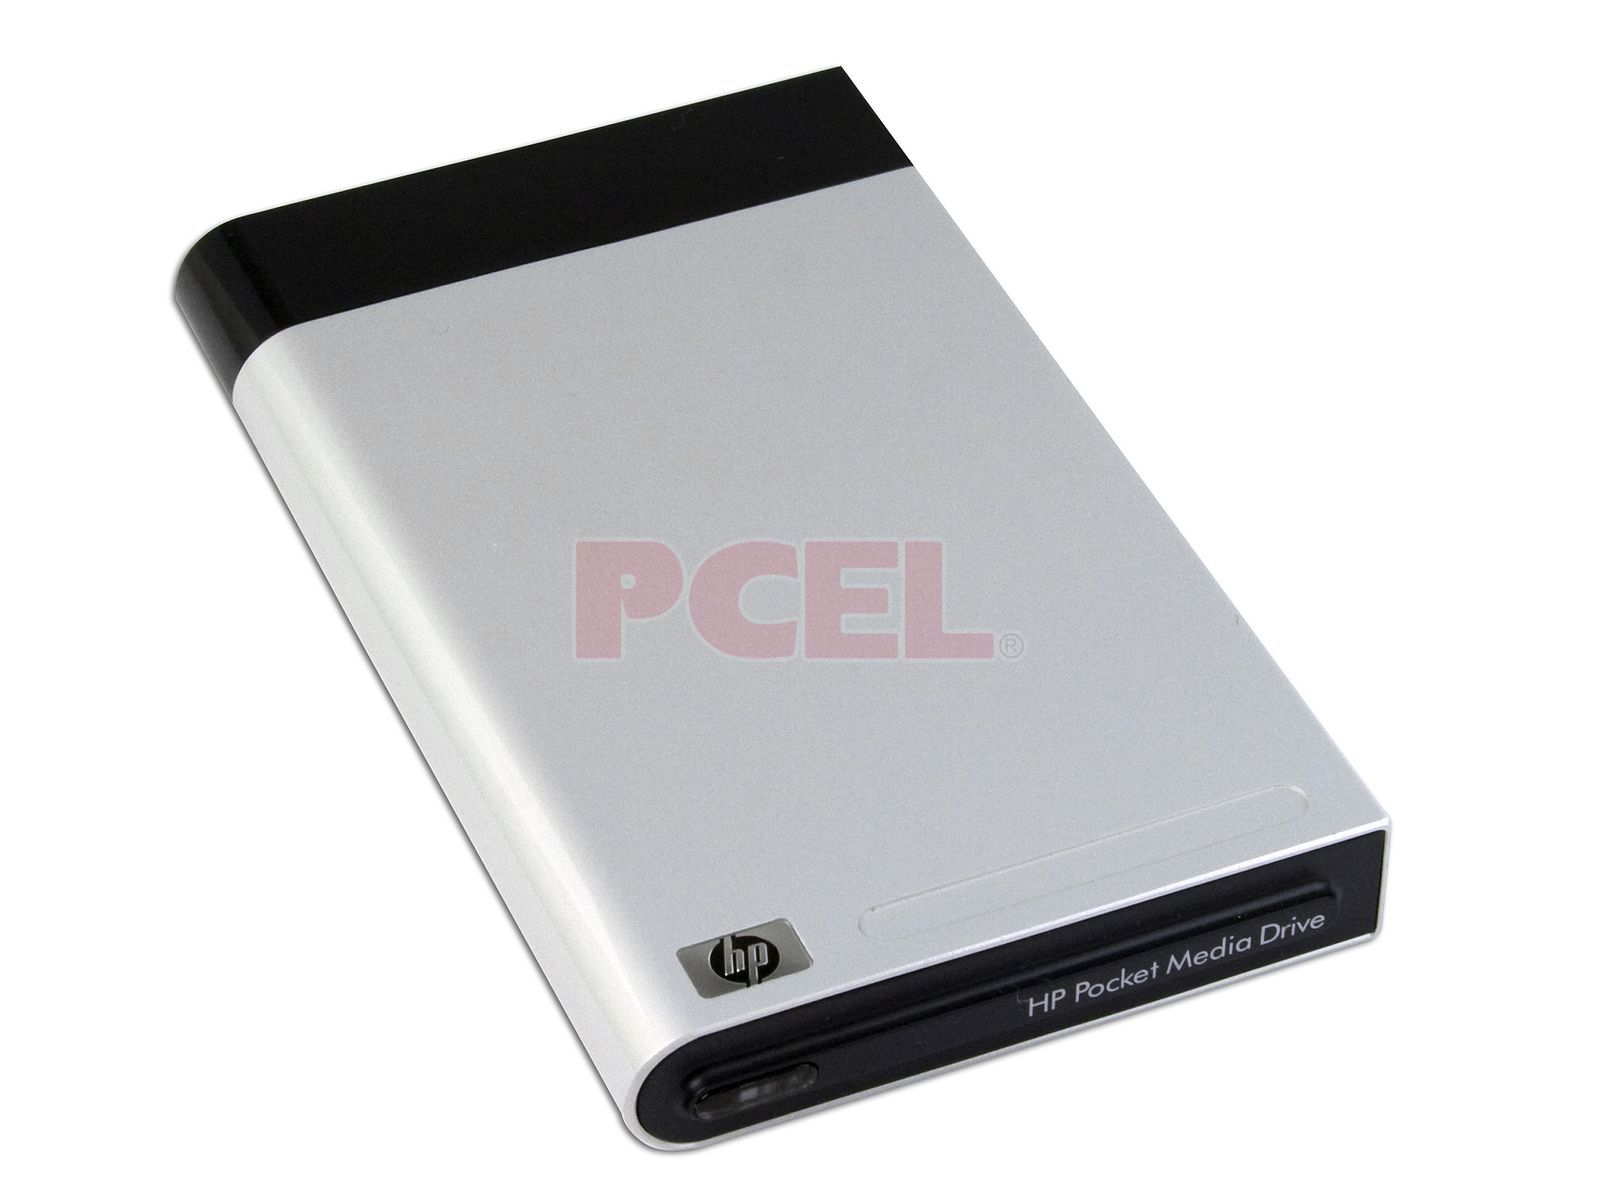 Disco Duro Portátil HP Pocket Media de 160 GB.